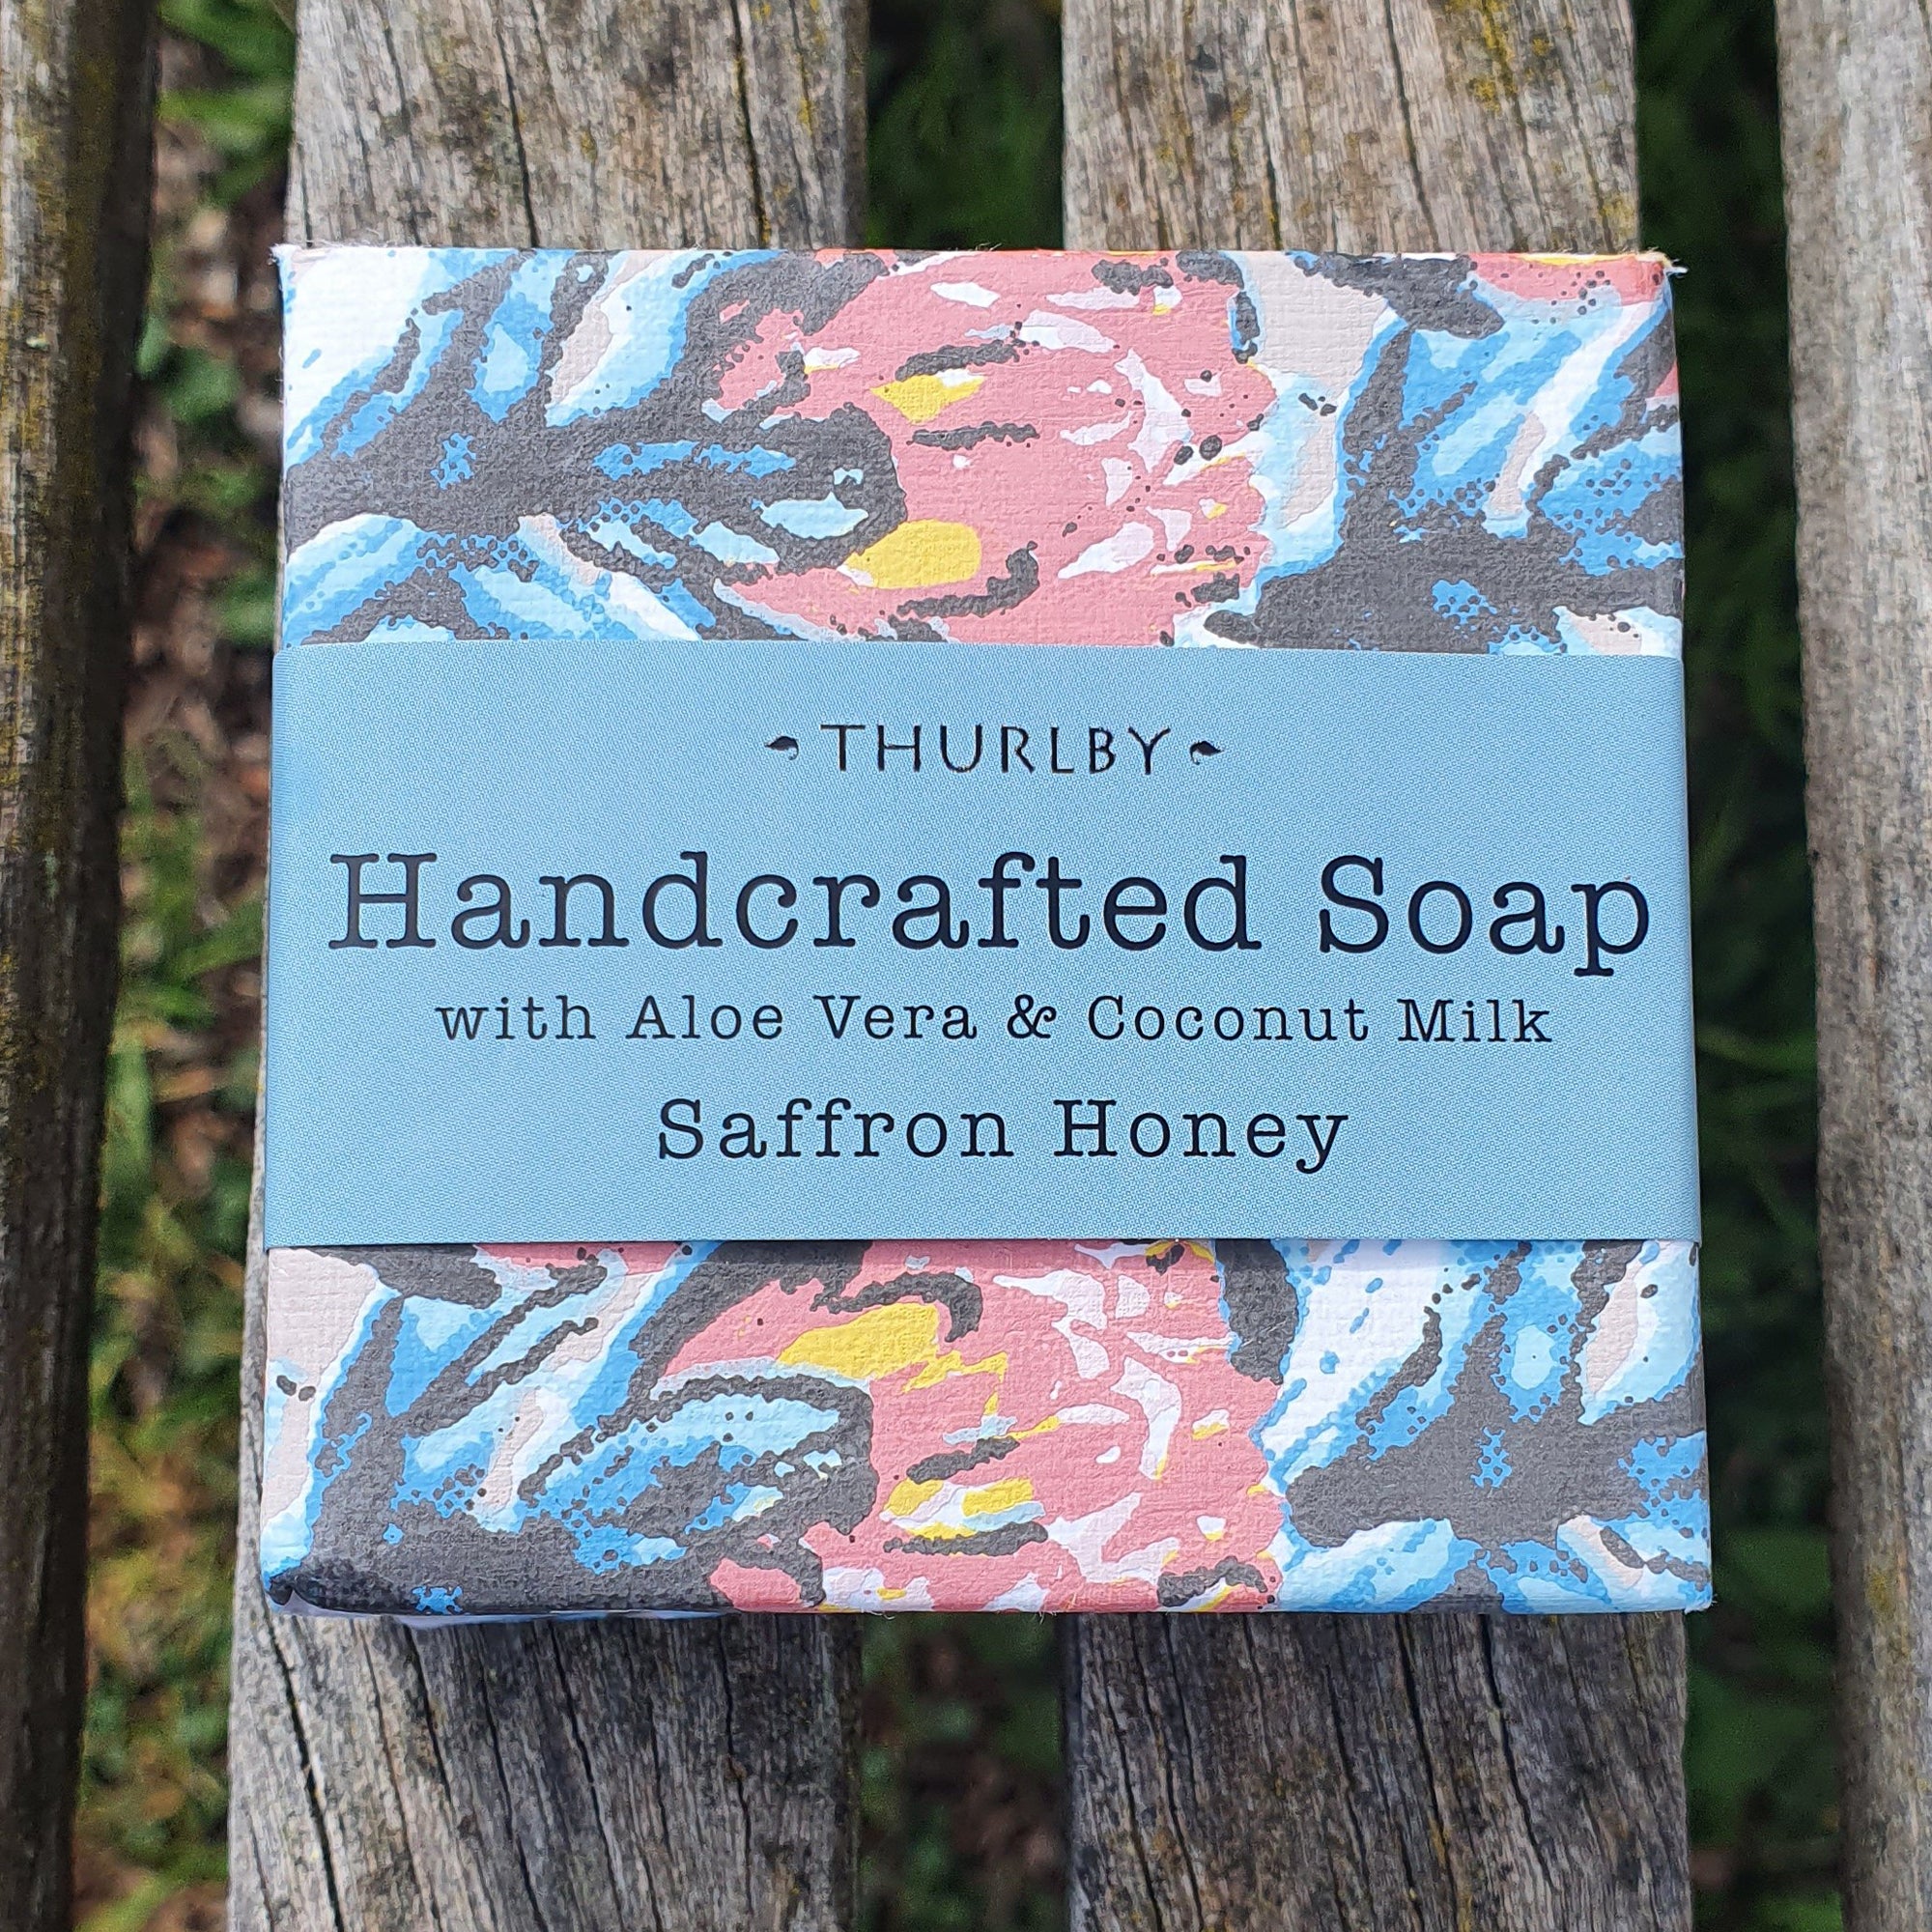 Thurlby Gondwana Handcrafted Soap